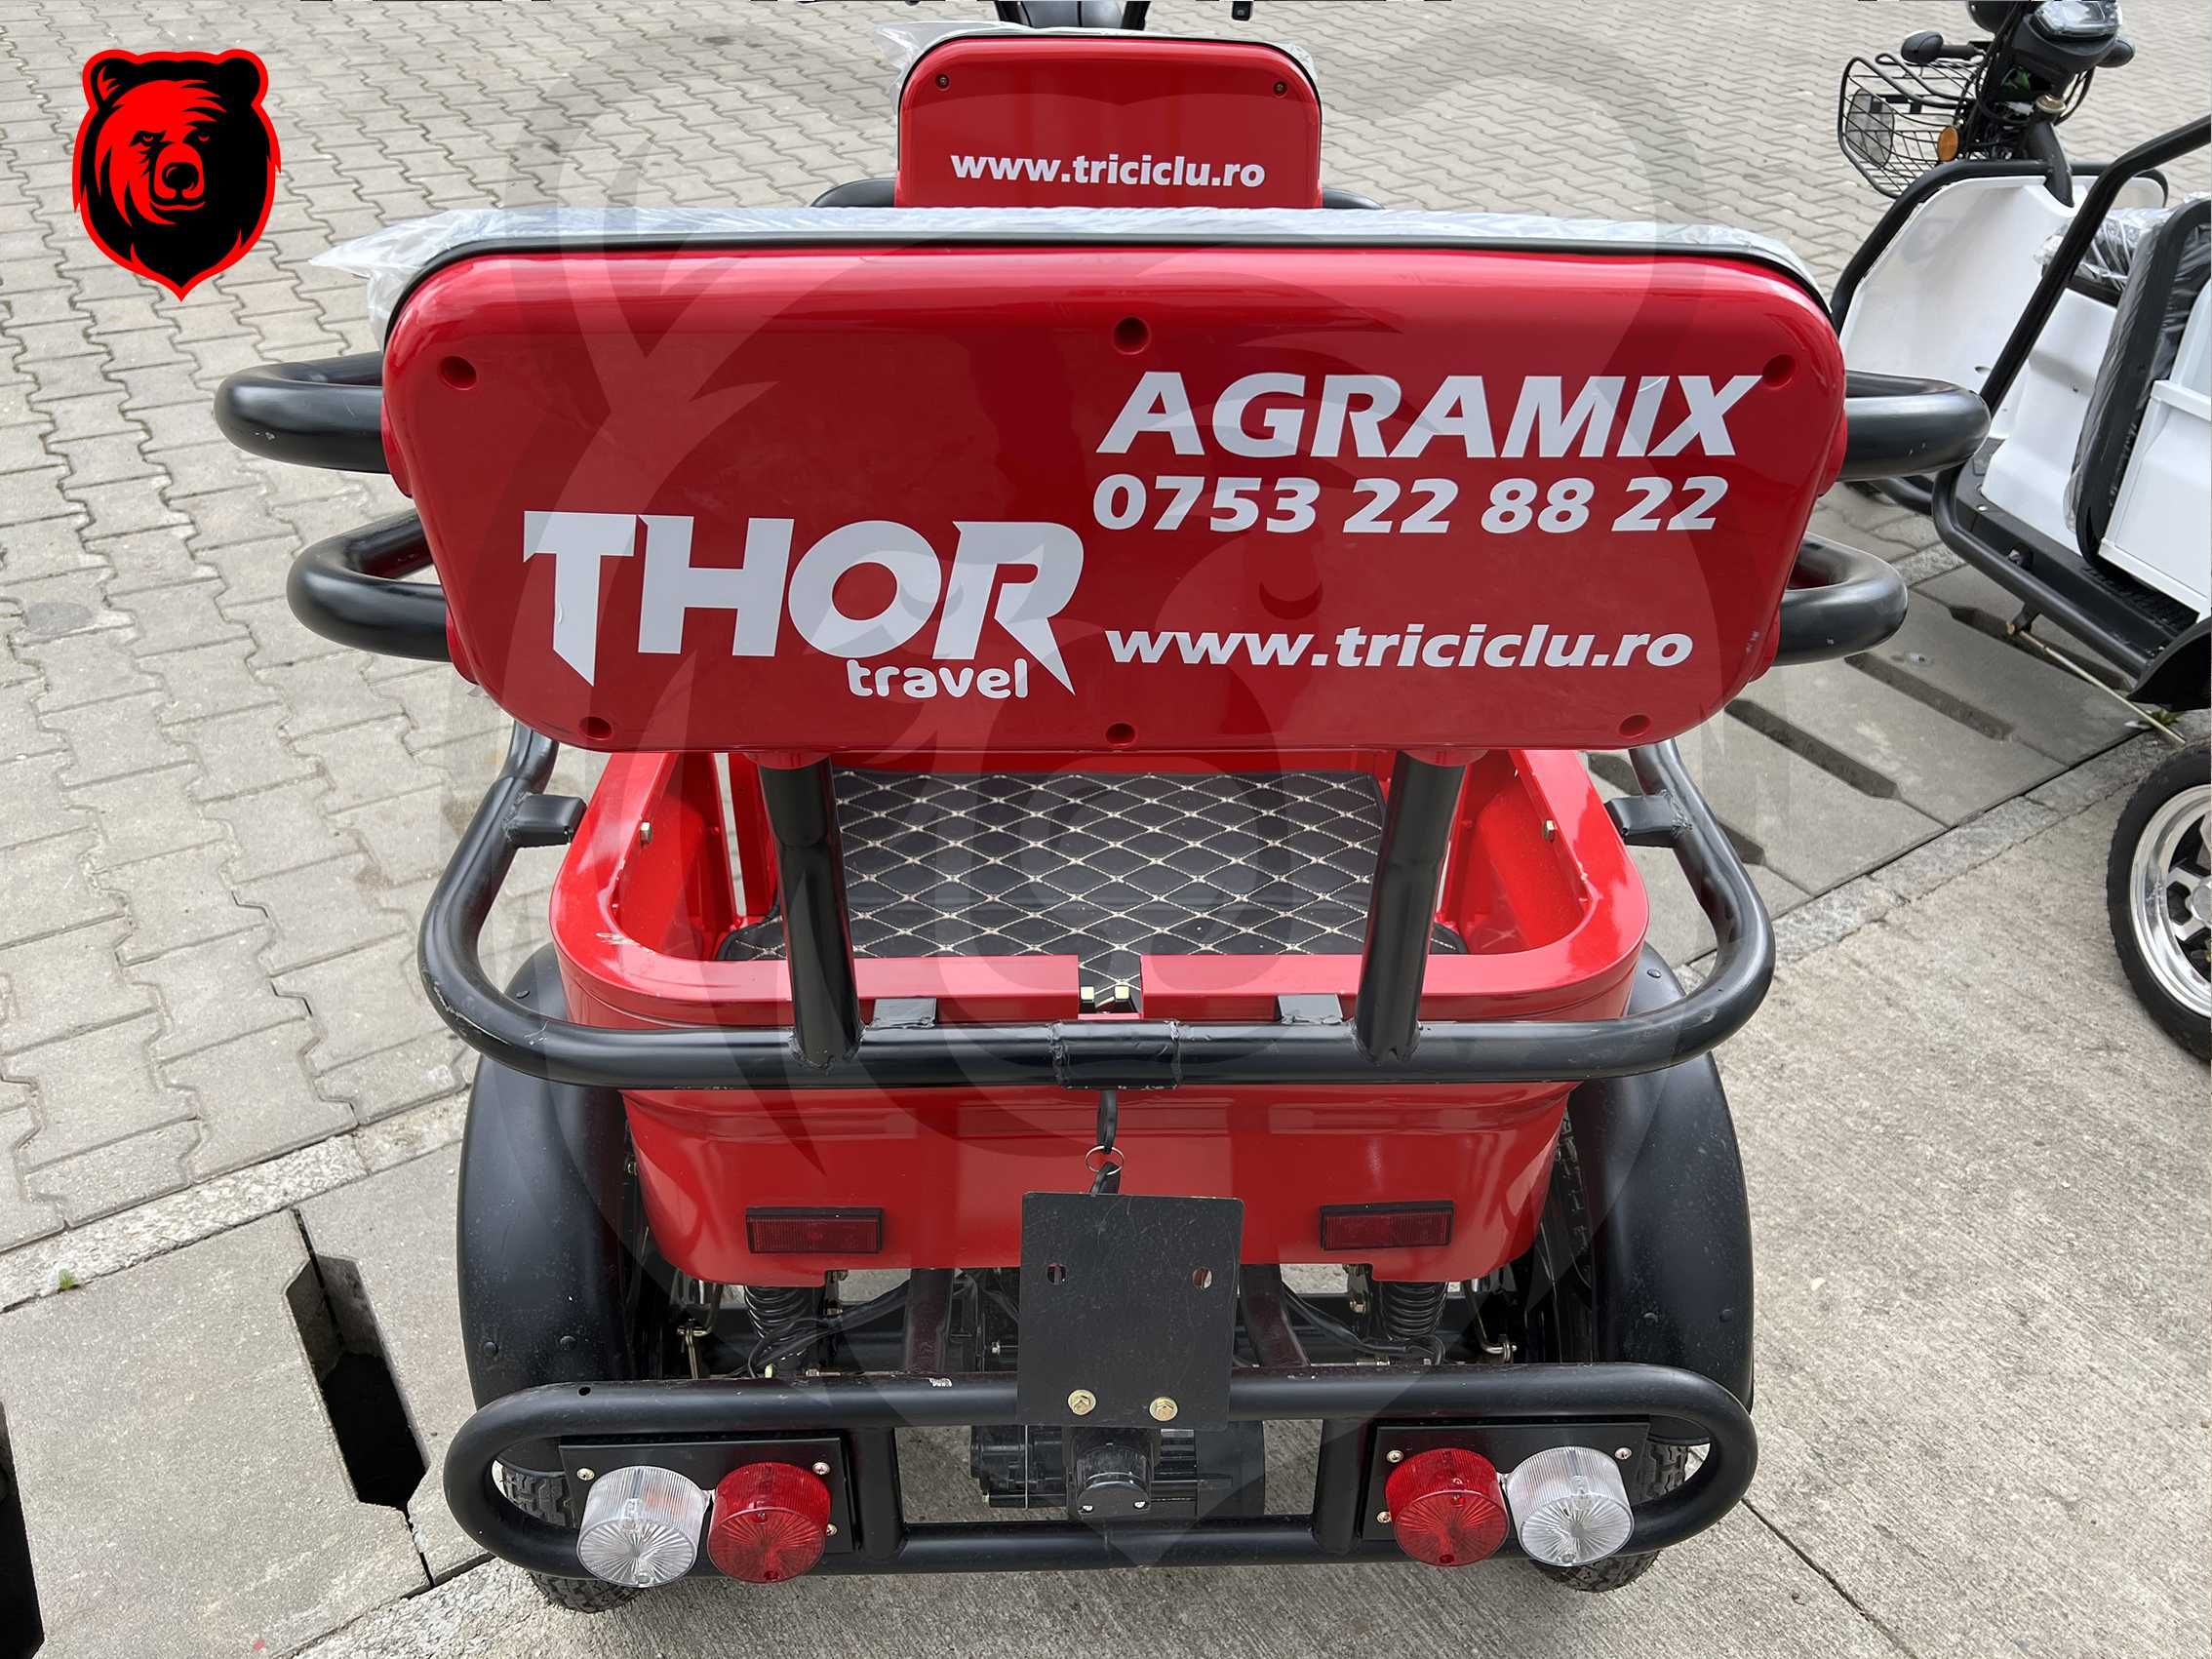 Thor travel triciclu electric cu CIV tuktuk Agramix NOU